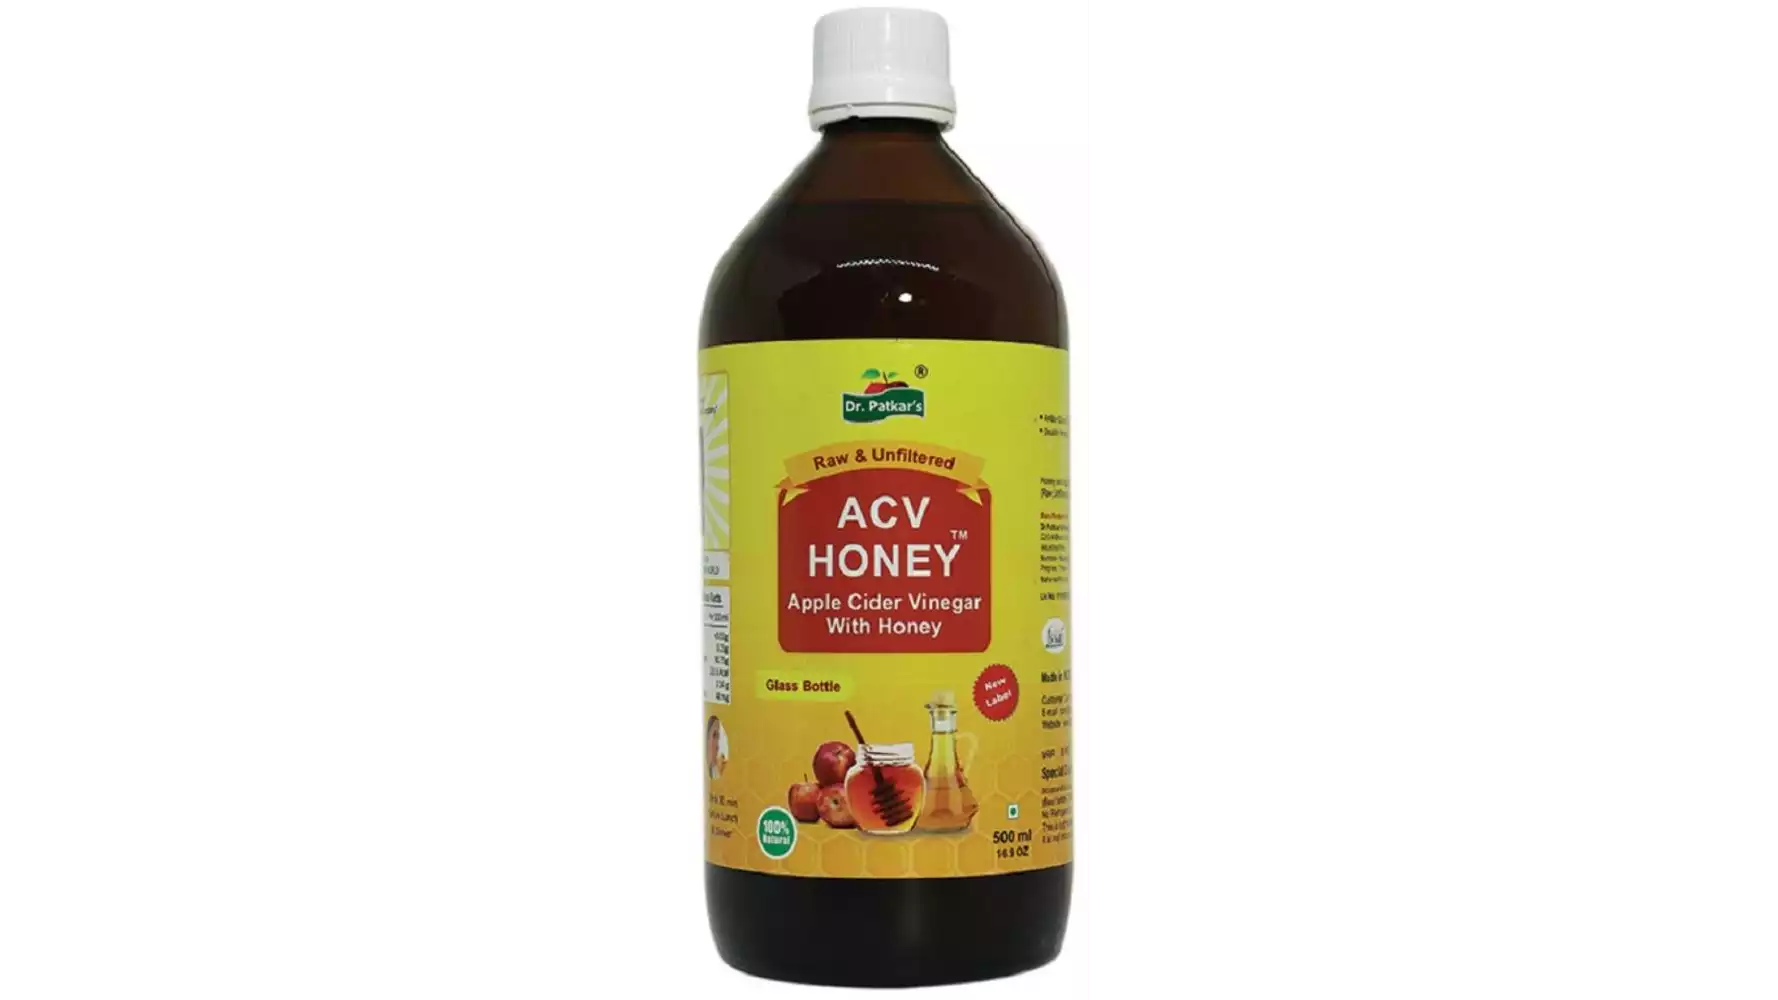 Dr. Patkars Apple Cider Vinegar With Honey (500ml)